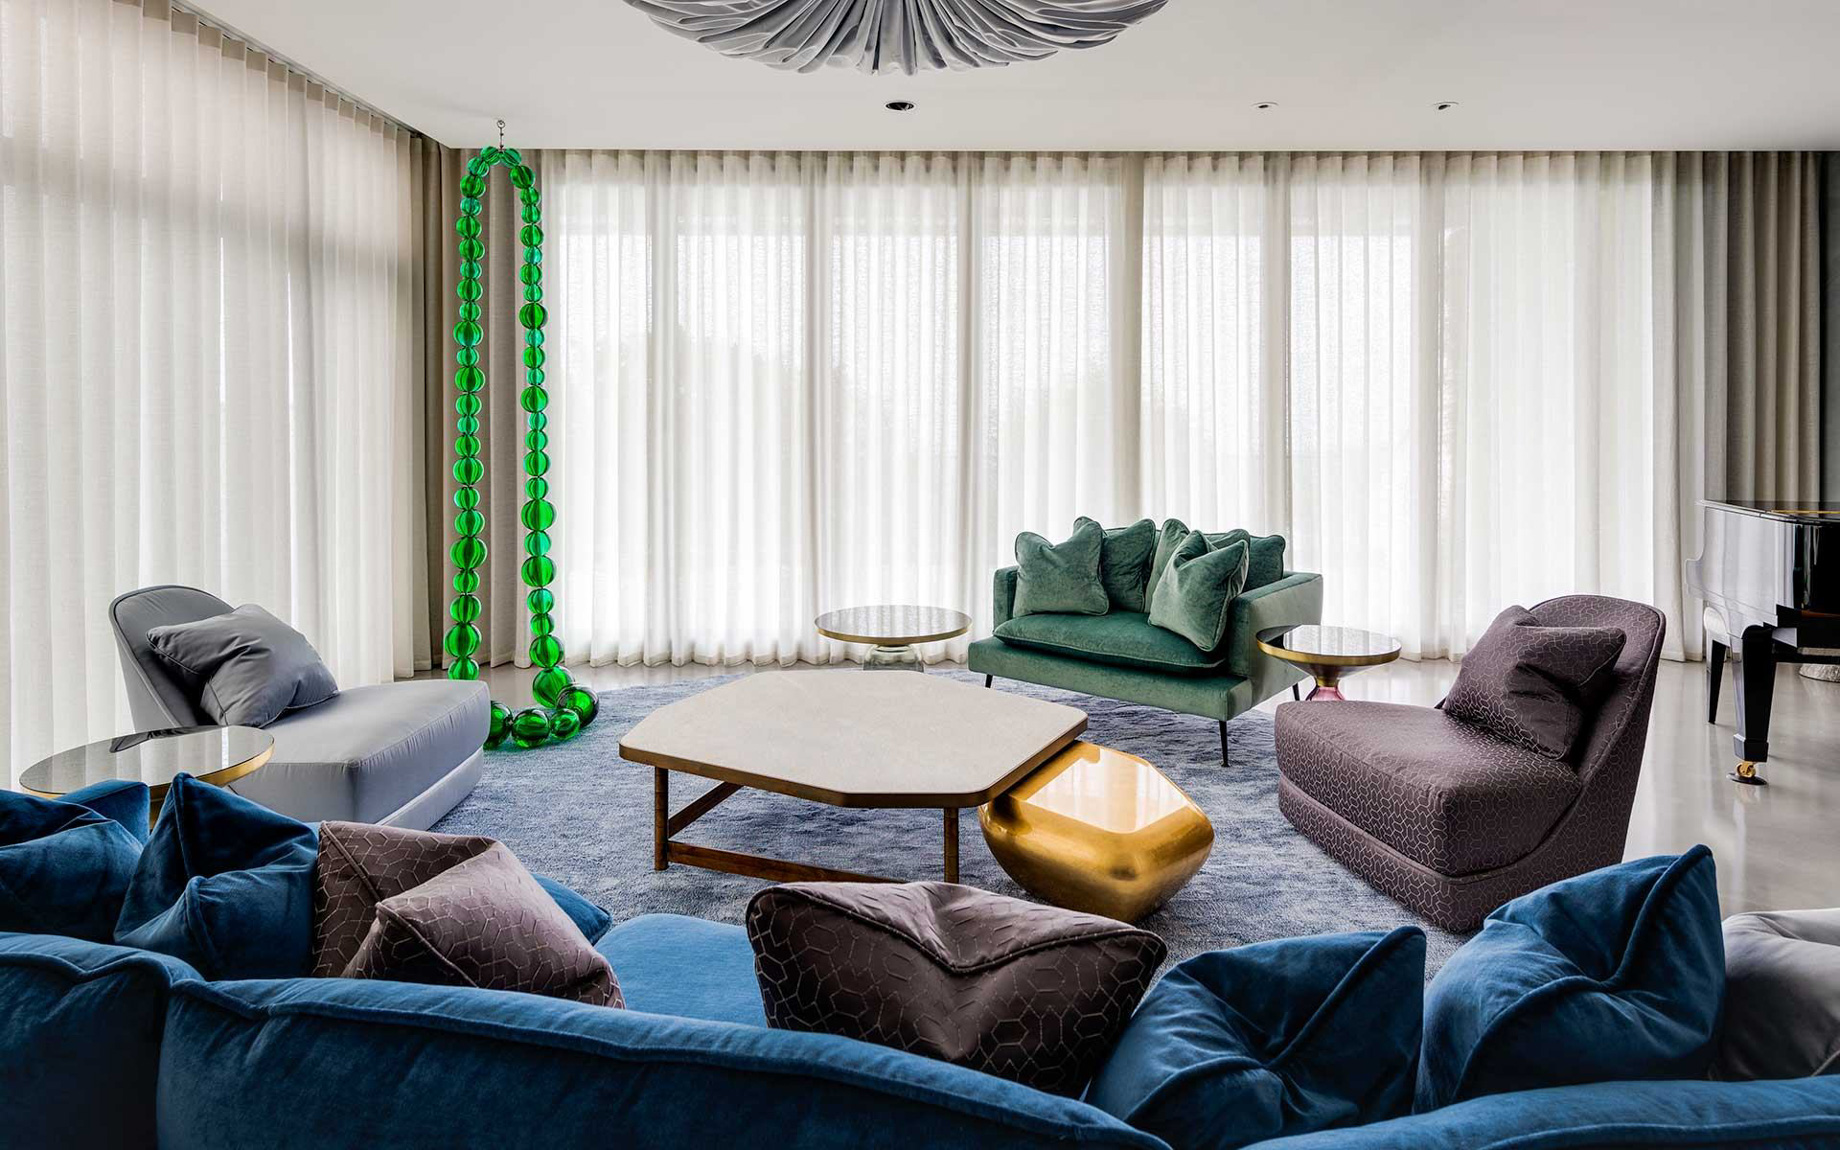 Pearl Neckless Luxury Apartment Interior Design Taipei, Taiwan – L’atelier Fantasia